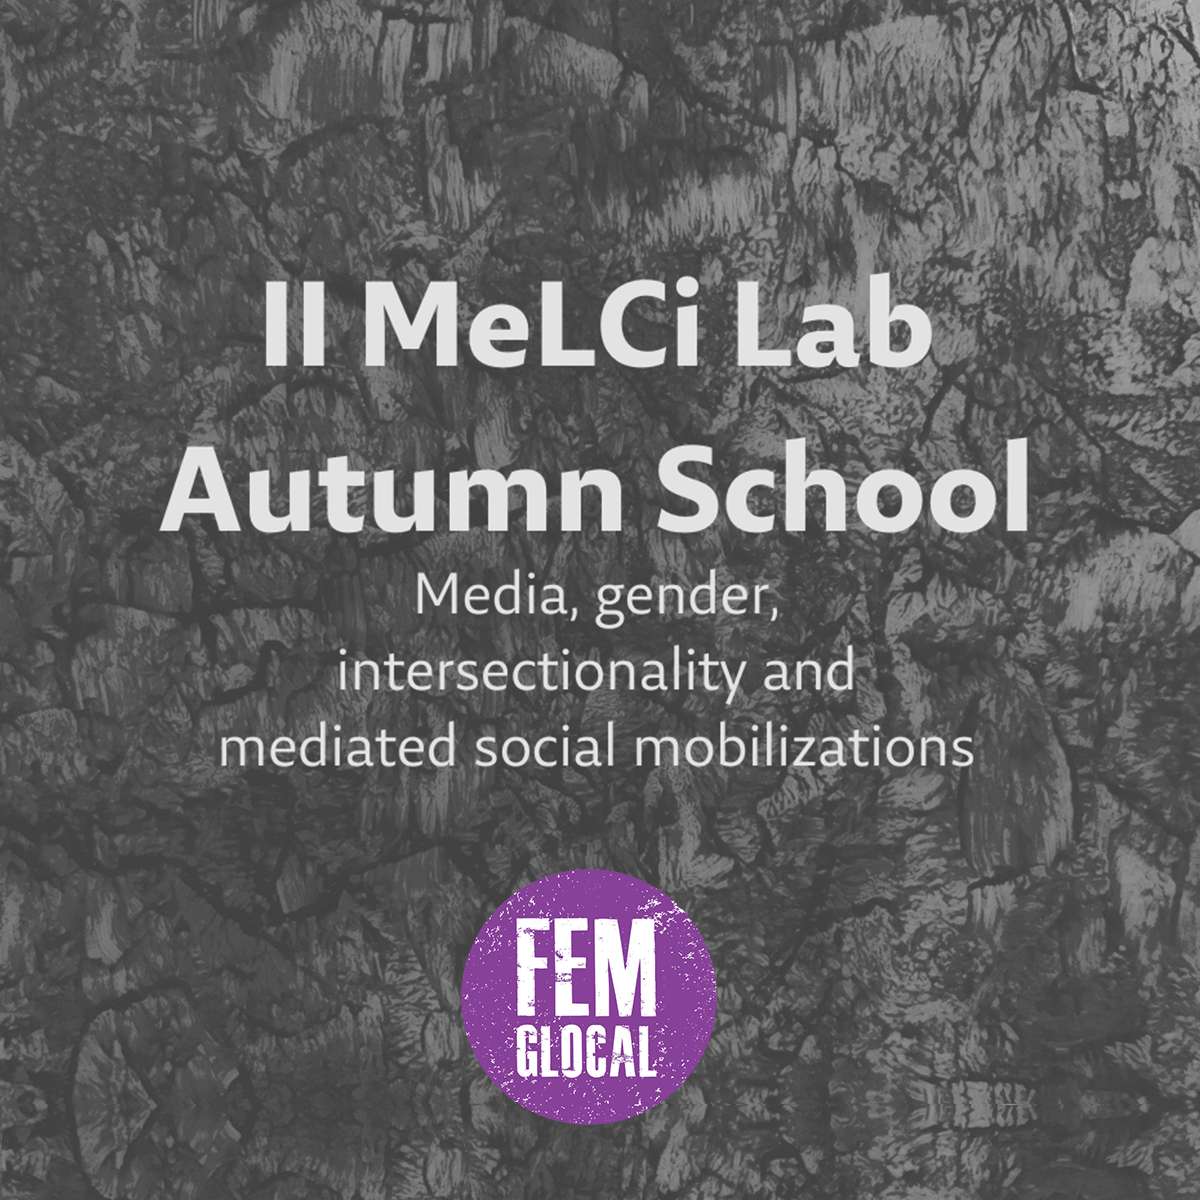 II MeLCi Lab Autumn School – Media, Gender, interseccionality and mediated social mobilizations